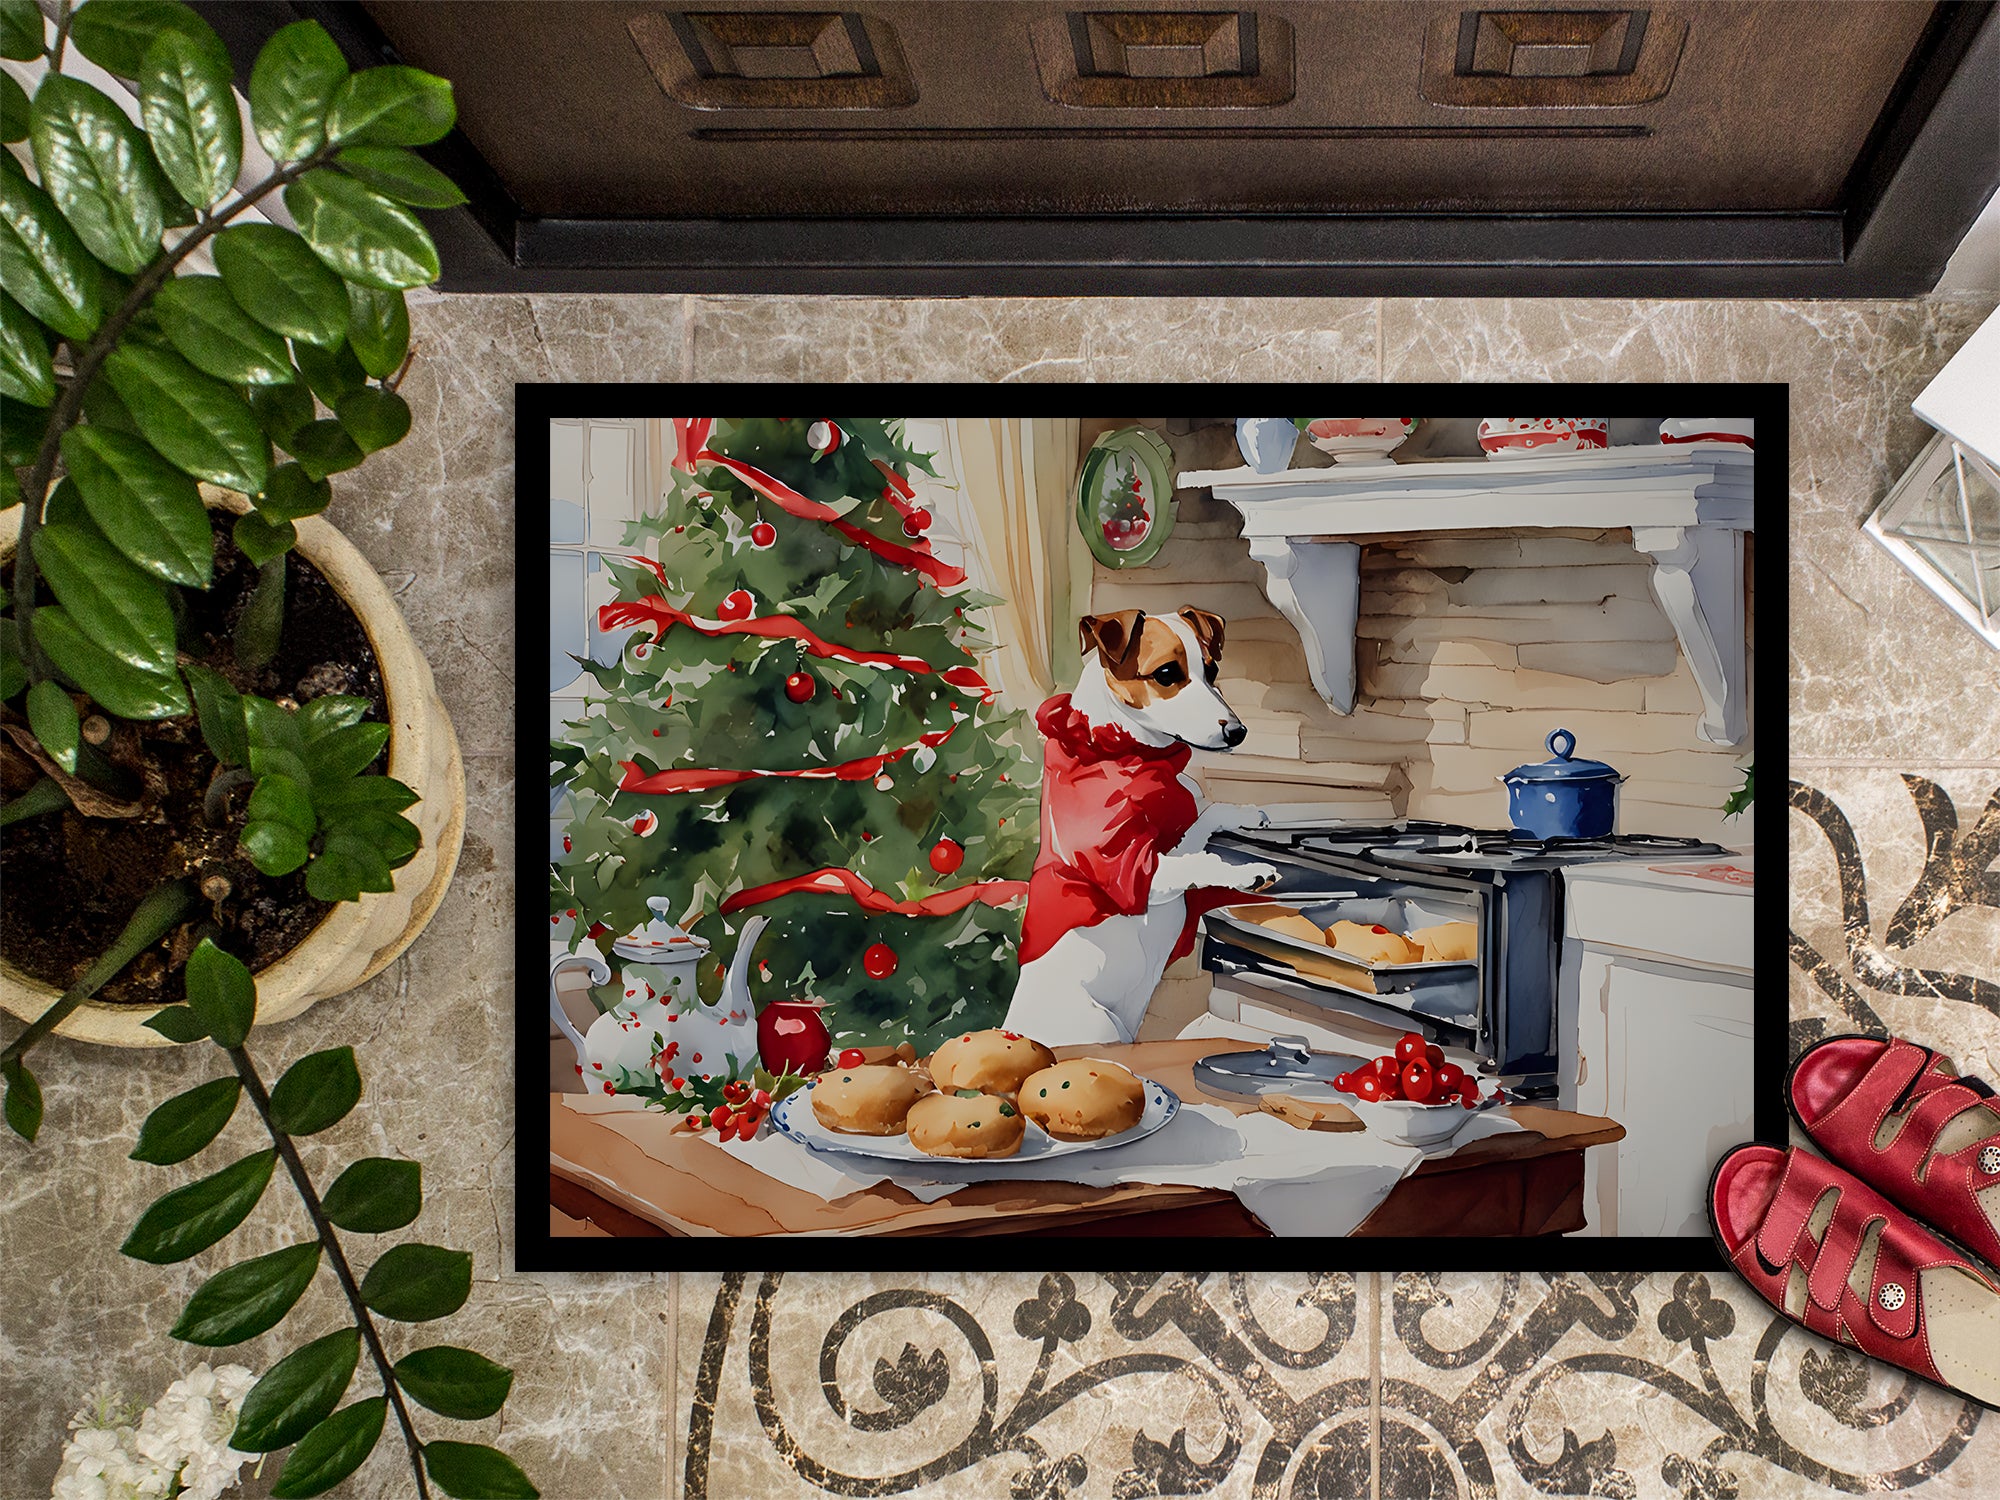 Jack Russell Terrier Christmas Cookies Doormat